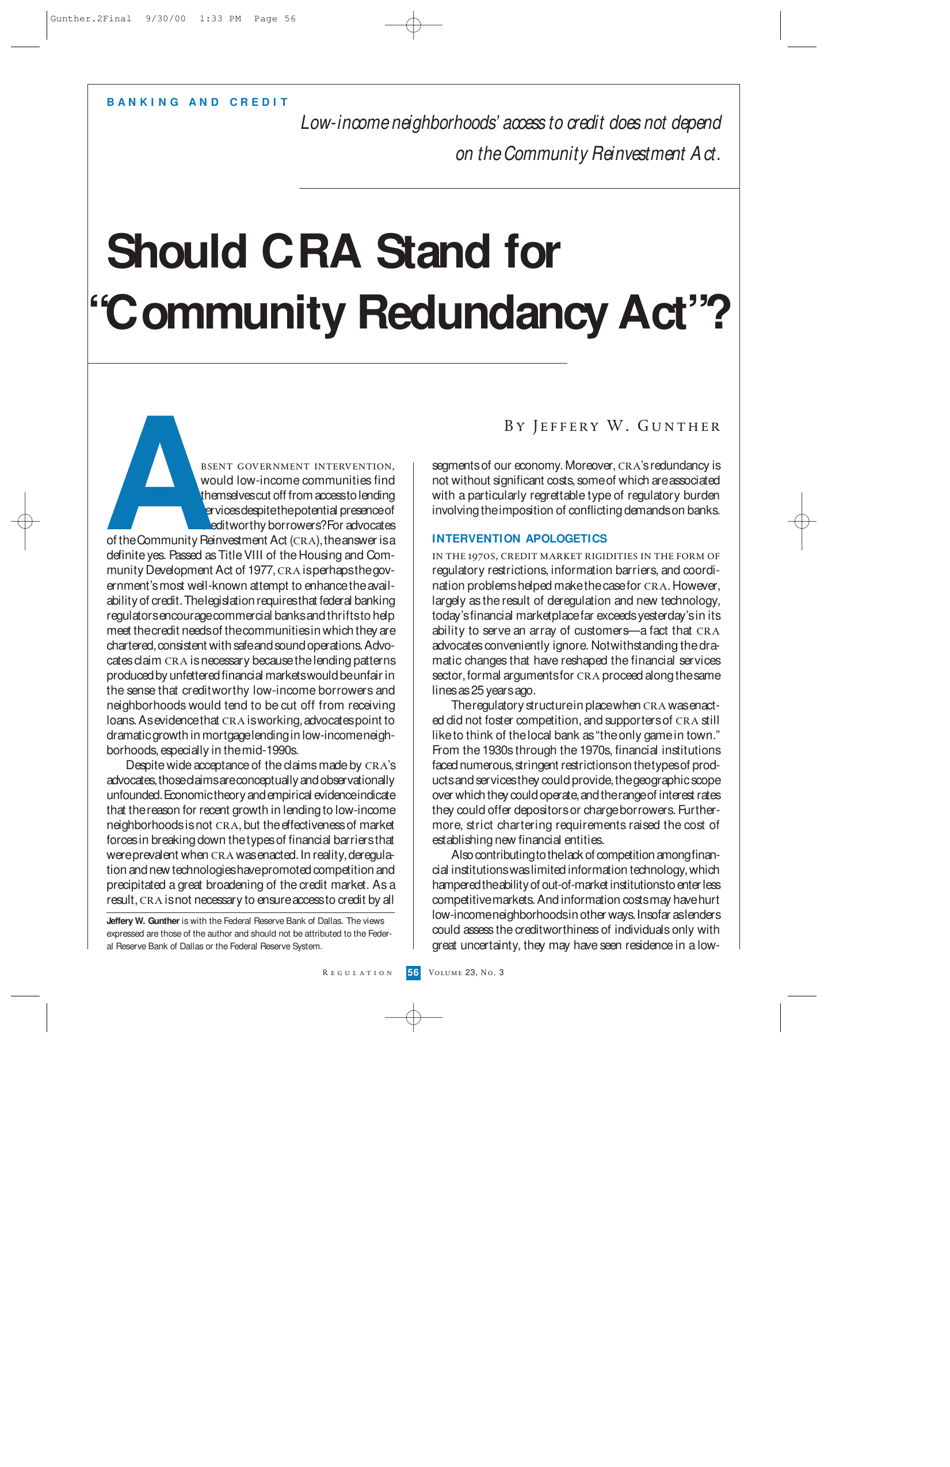 Community Redundancy Act Document